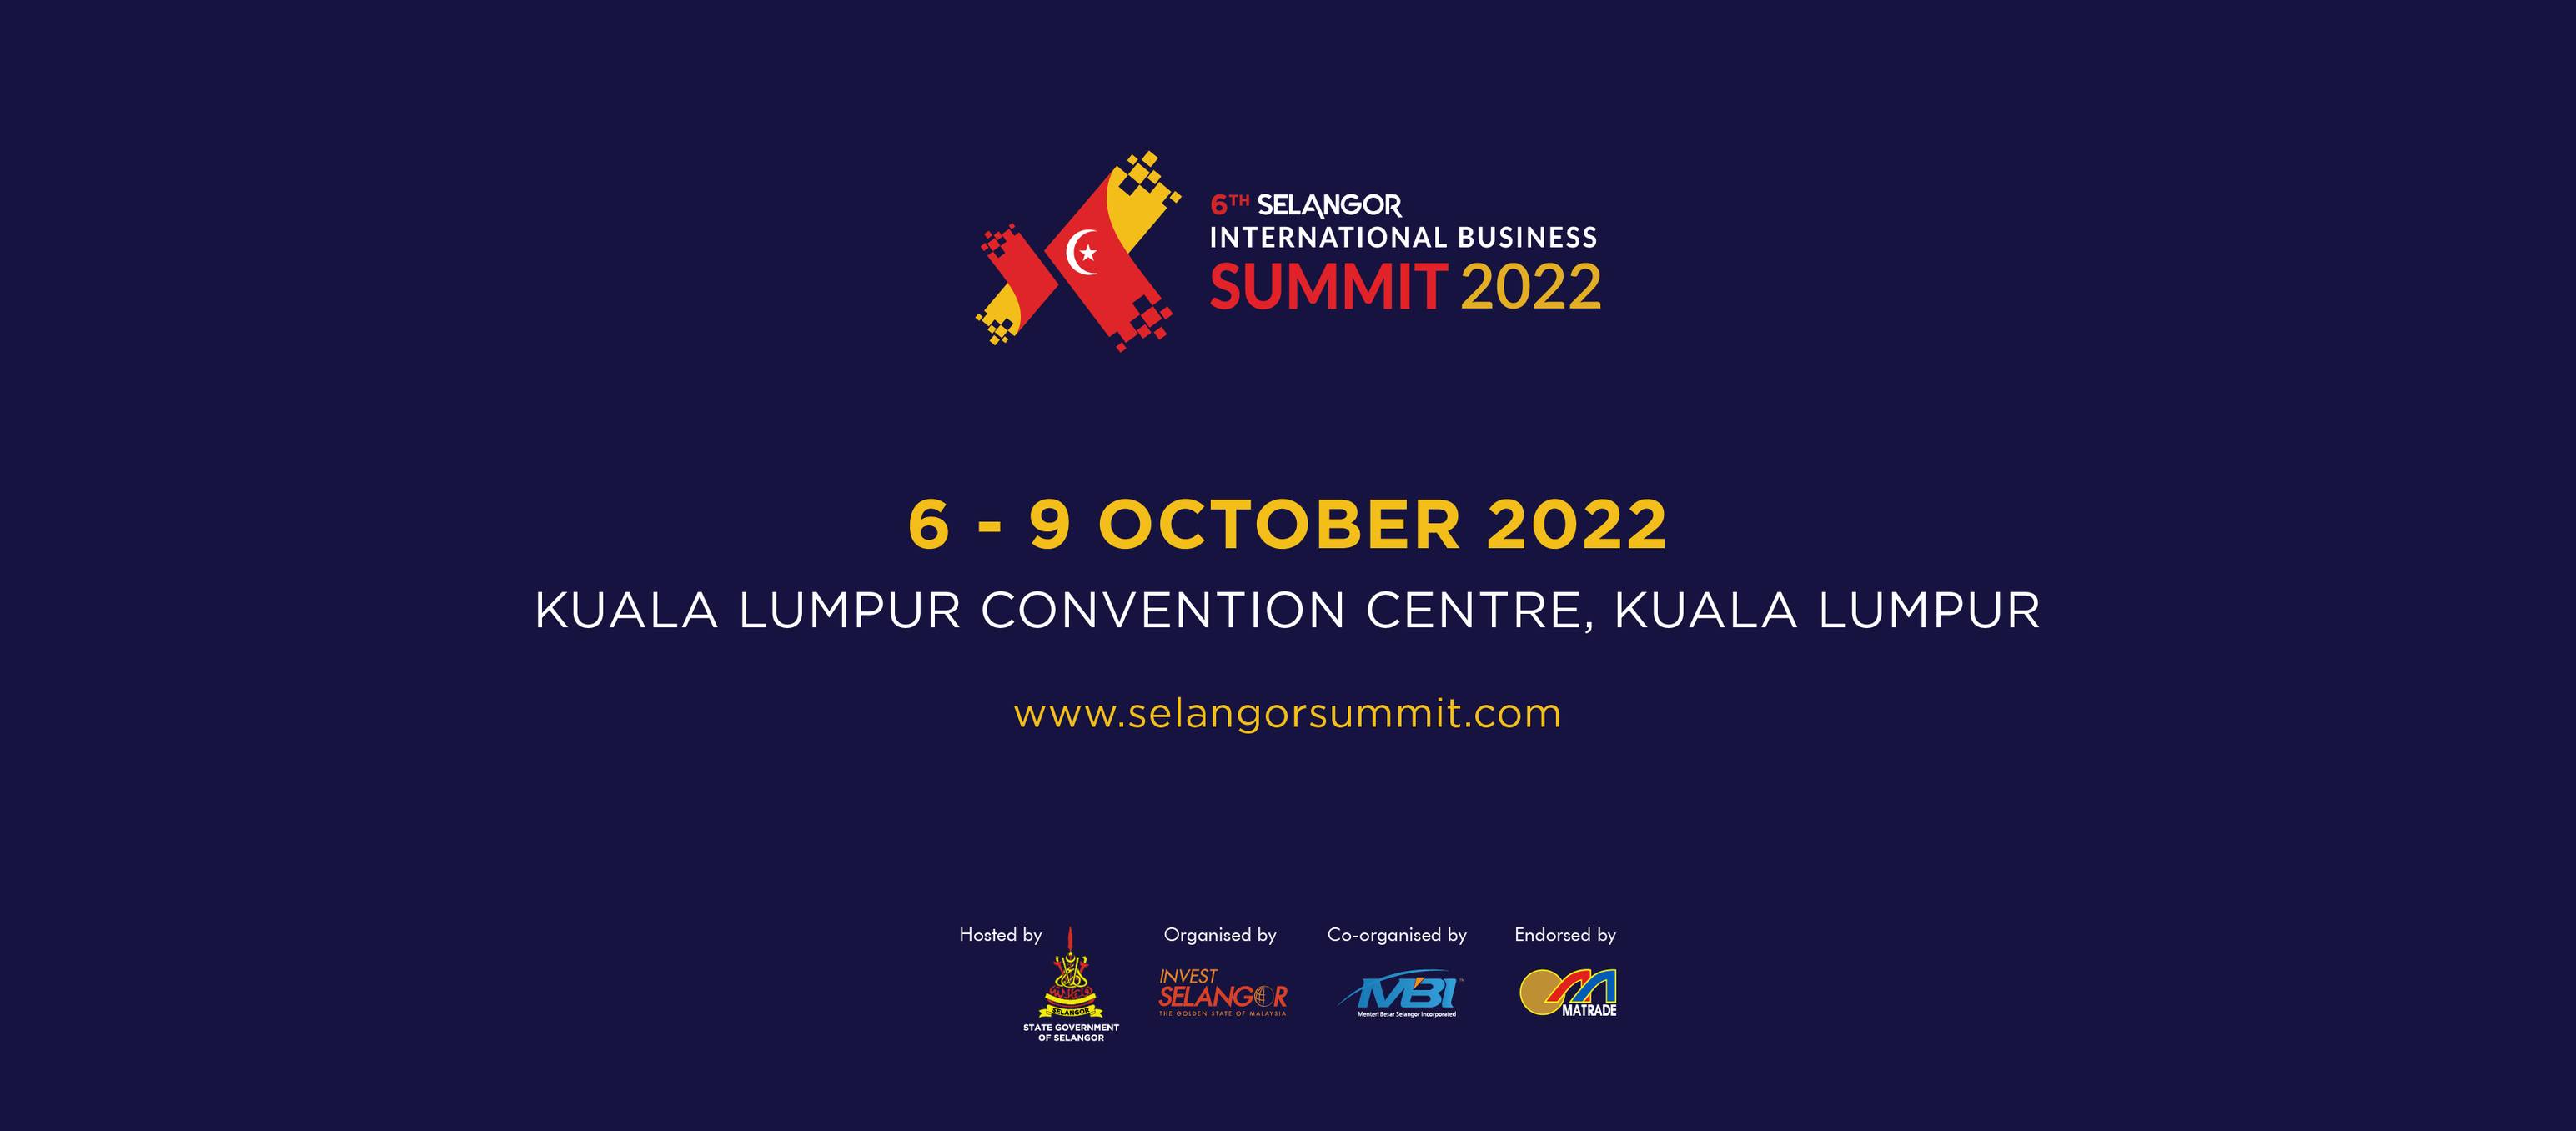 Selangor Summit 2022